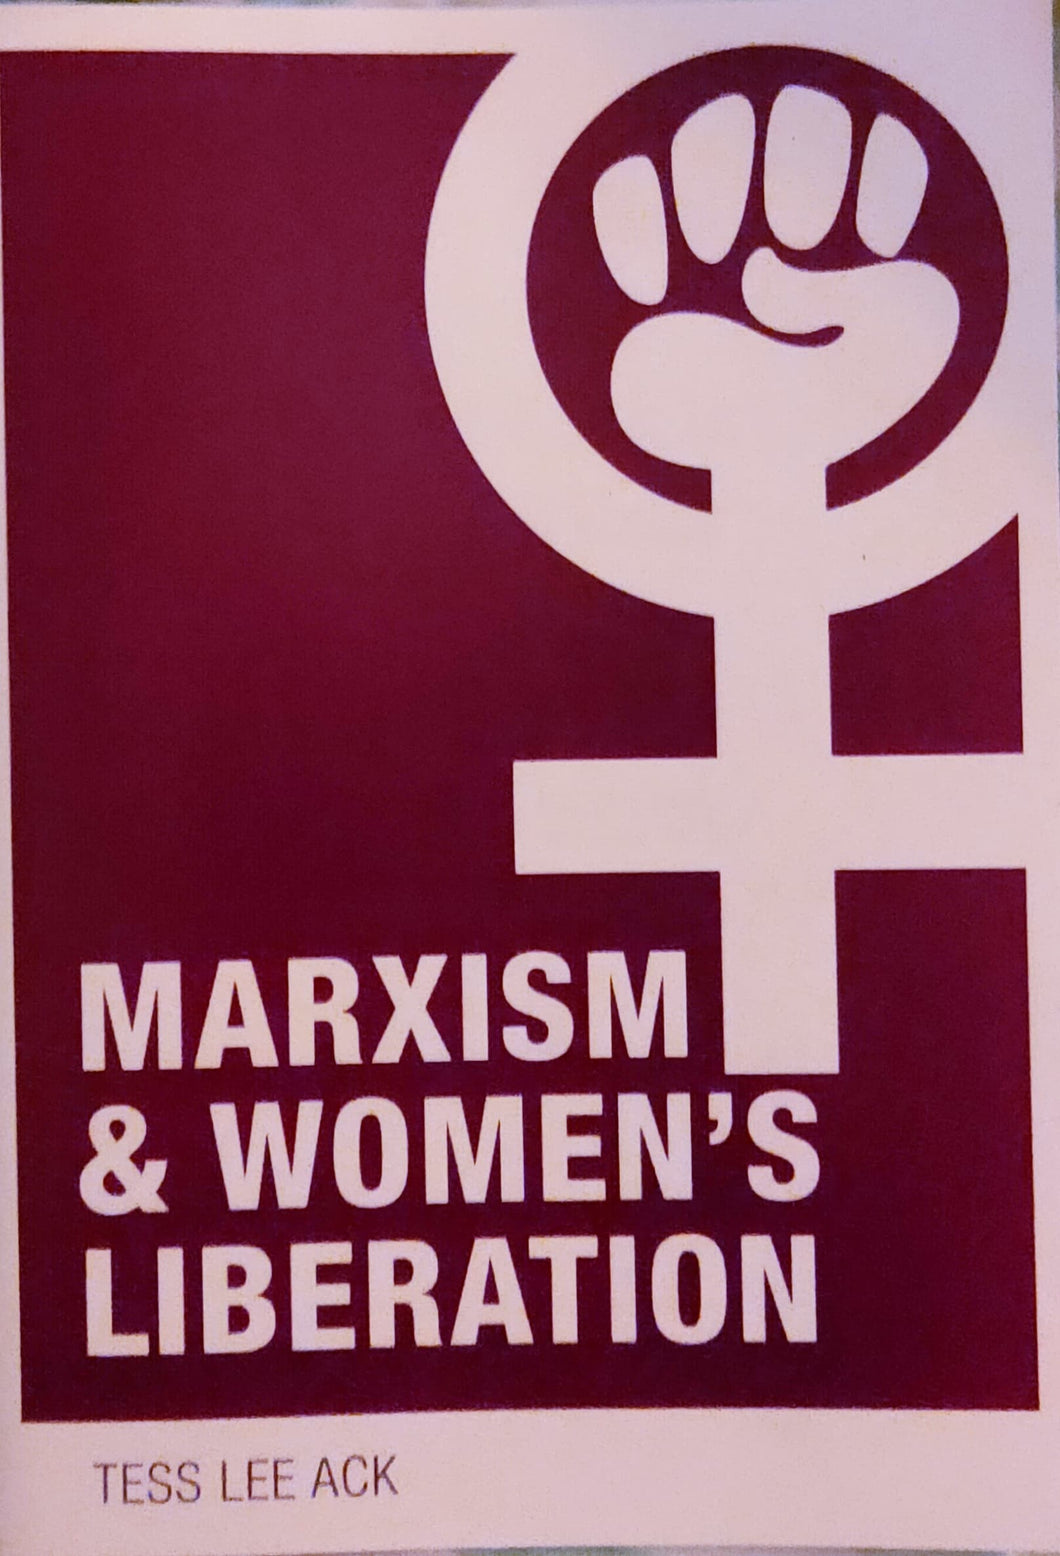 Marxism & Women's Liberation